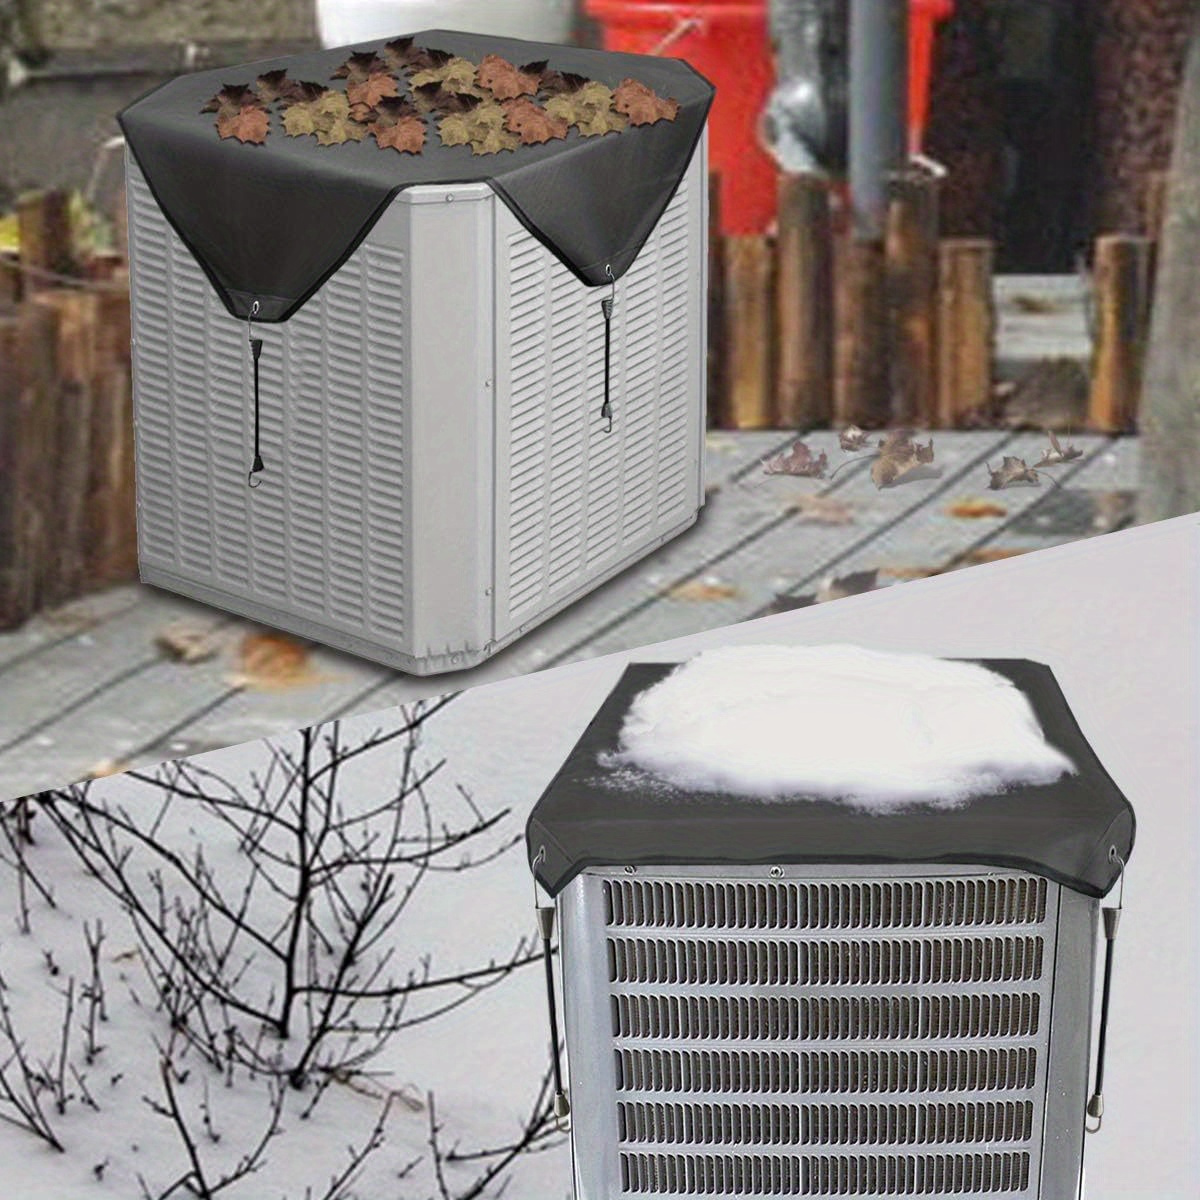 Outdoor maschinen zentral klimaanlagen abdeckung 1 Stück Top